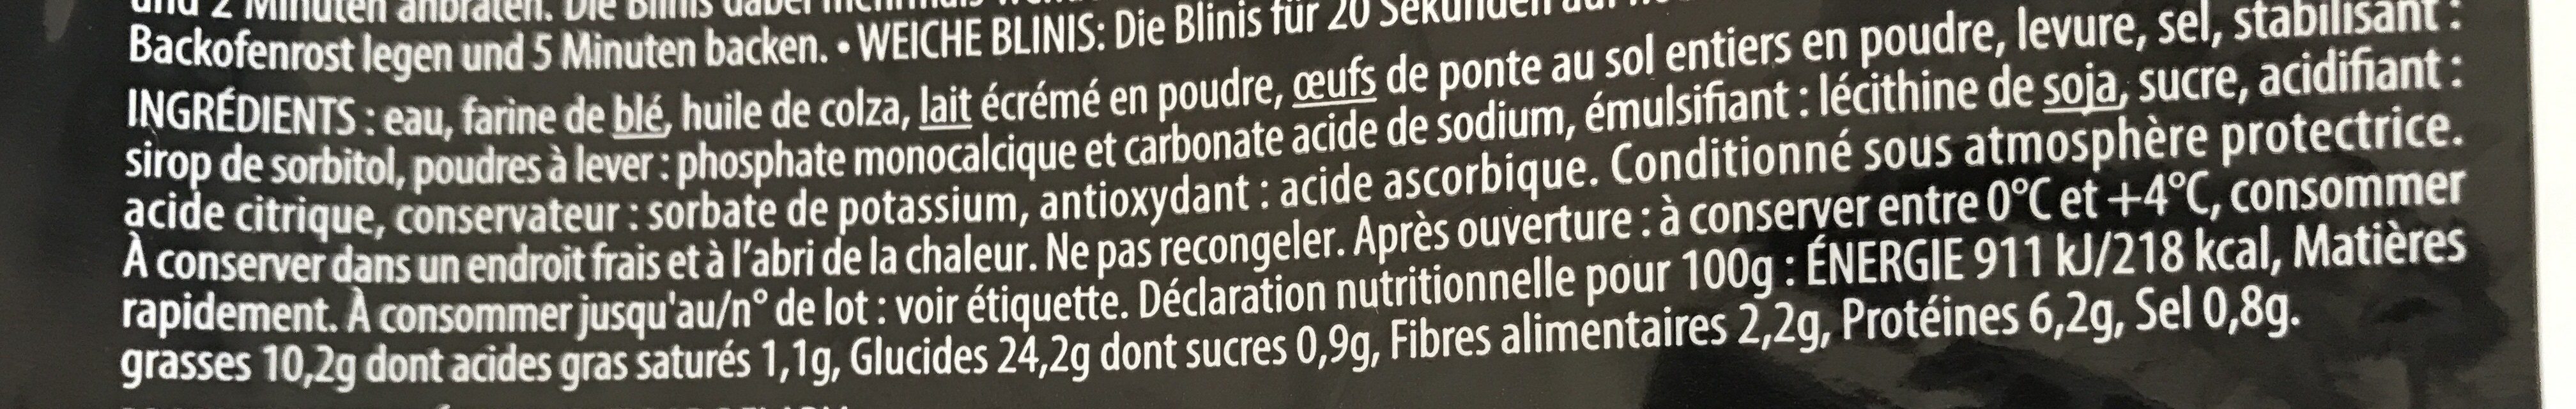 20 Mini Blinis - Ingrédients